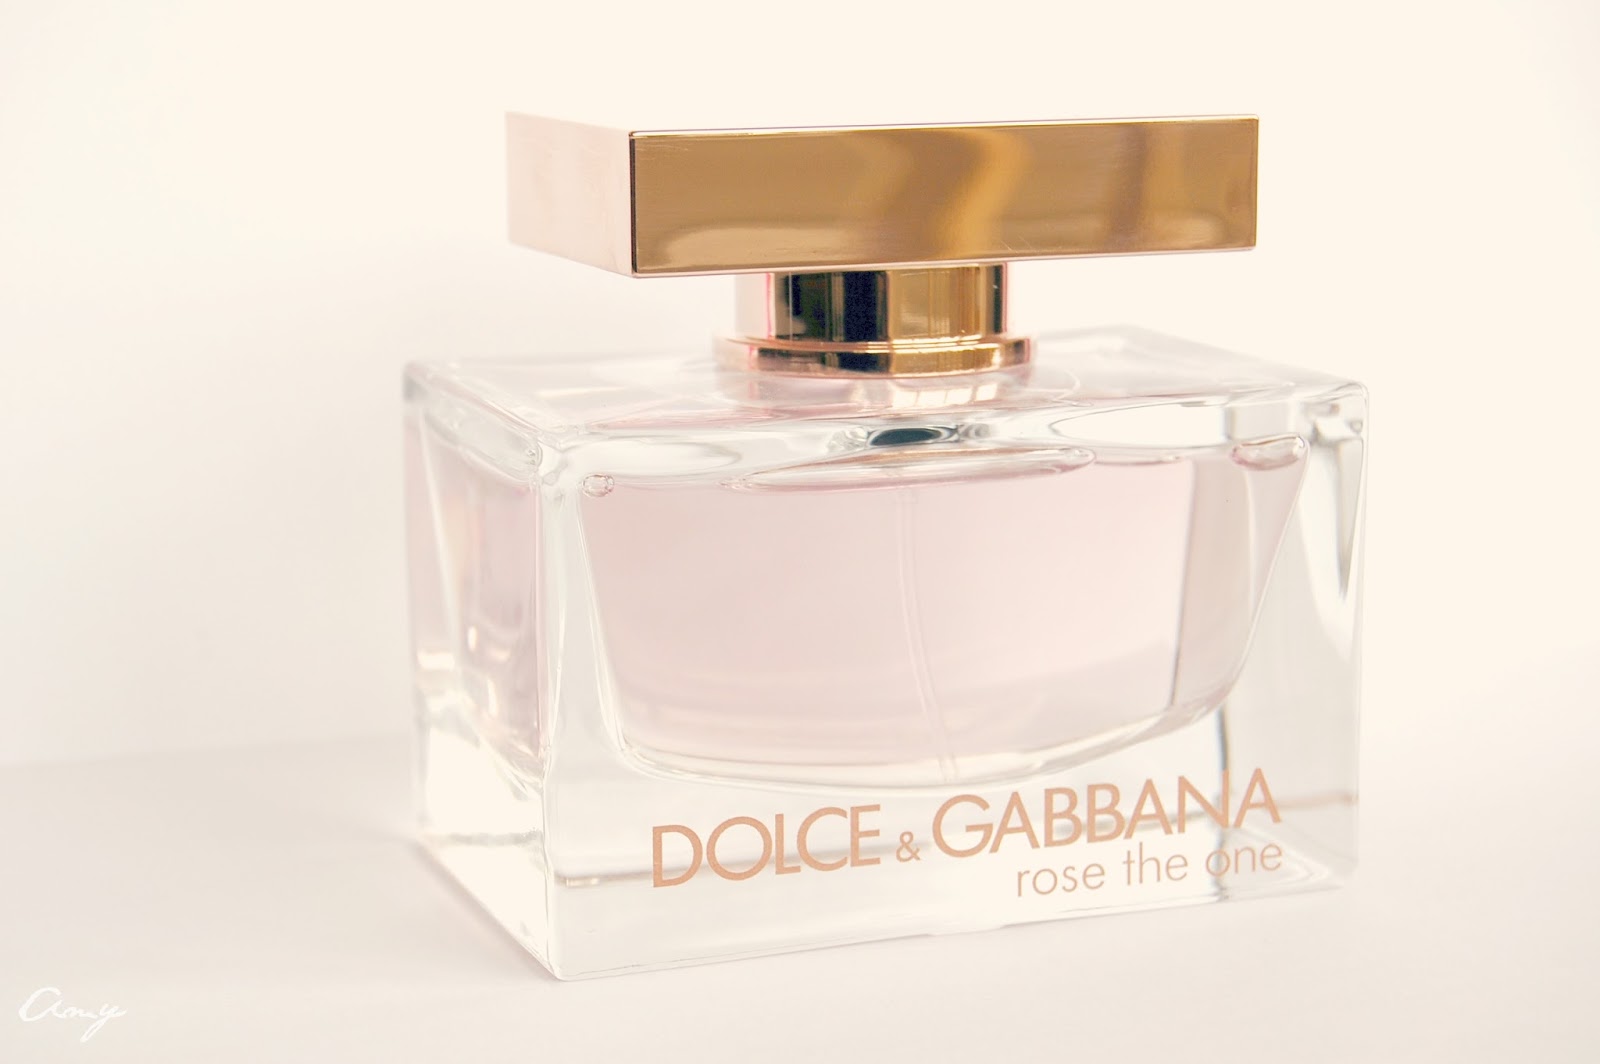 Dolce Gabbana Rose the one. Dolce Gabbana Rose. Дольче Габбана Роуз. Дольче габбана розовые духи